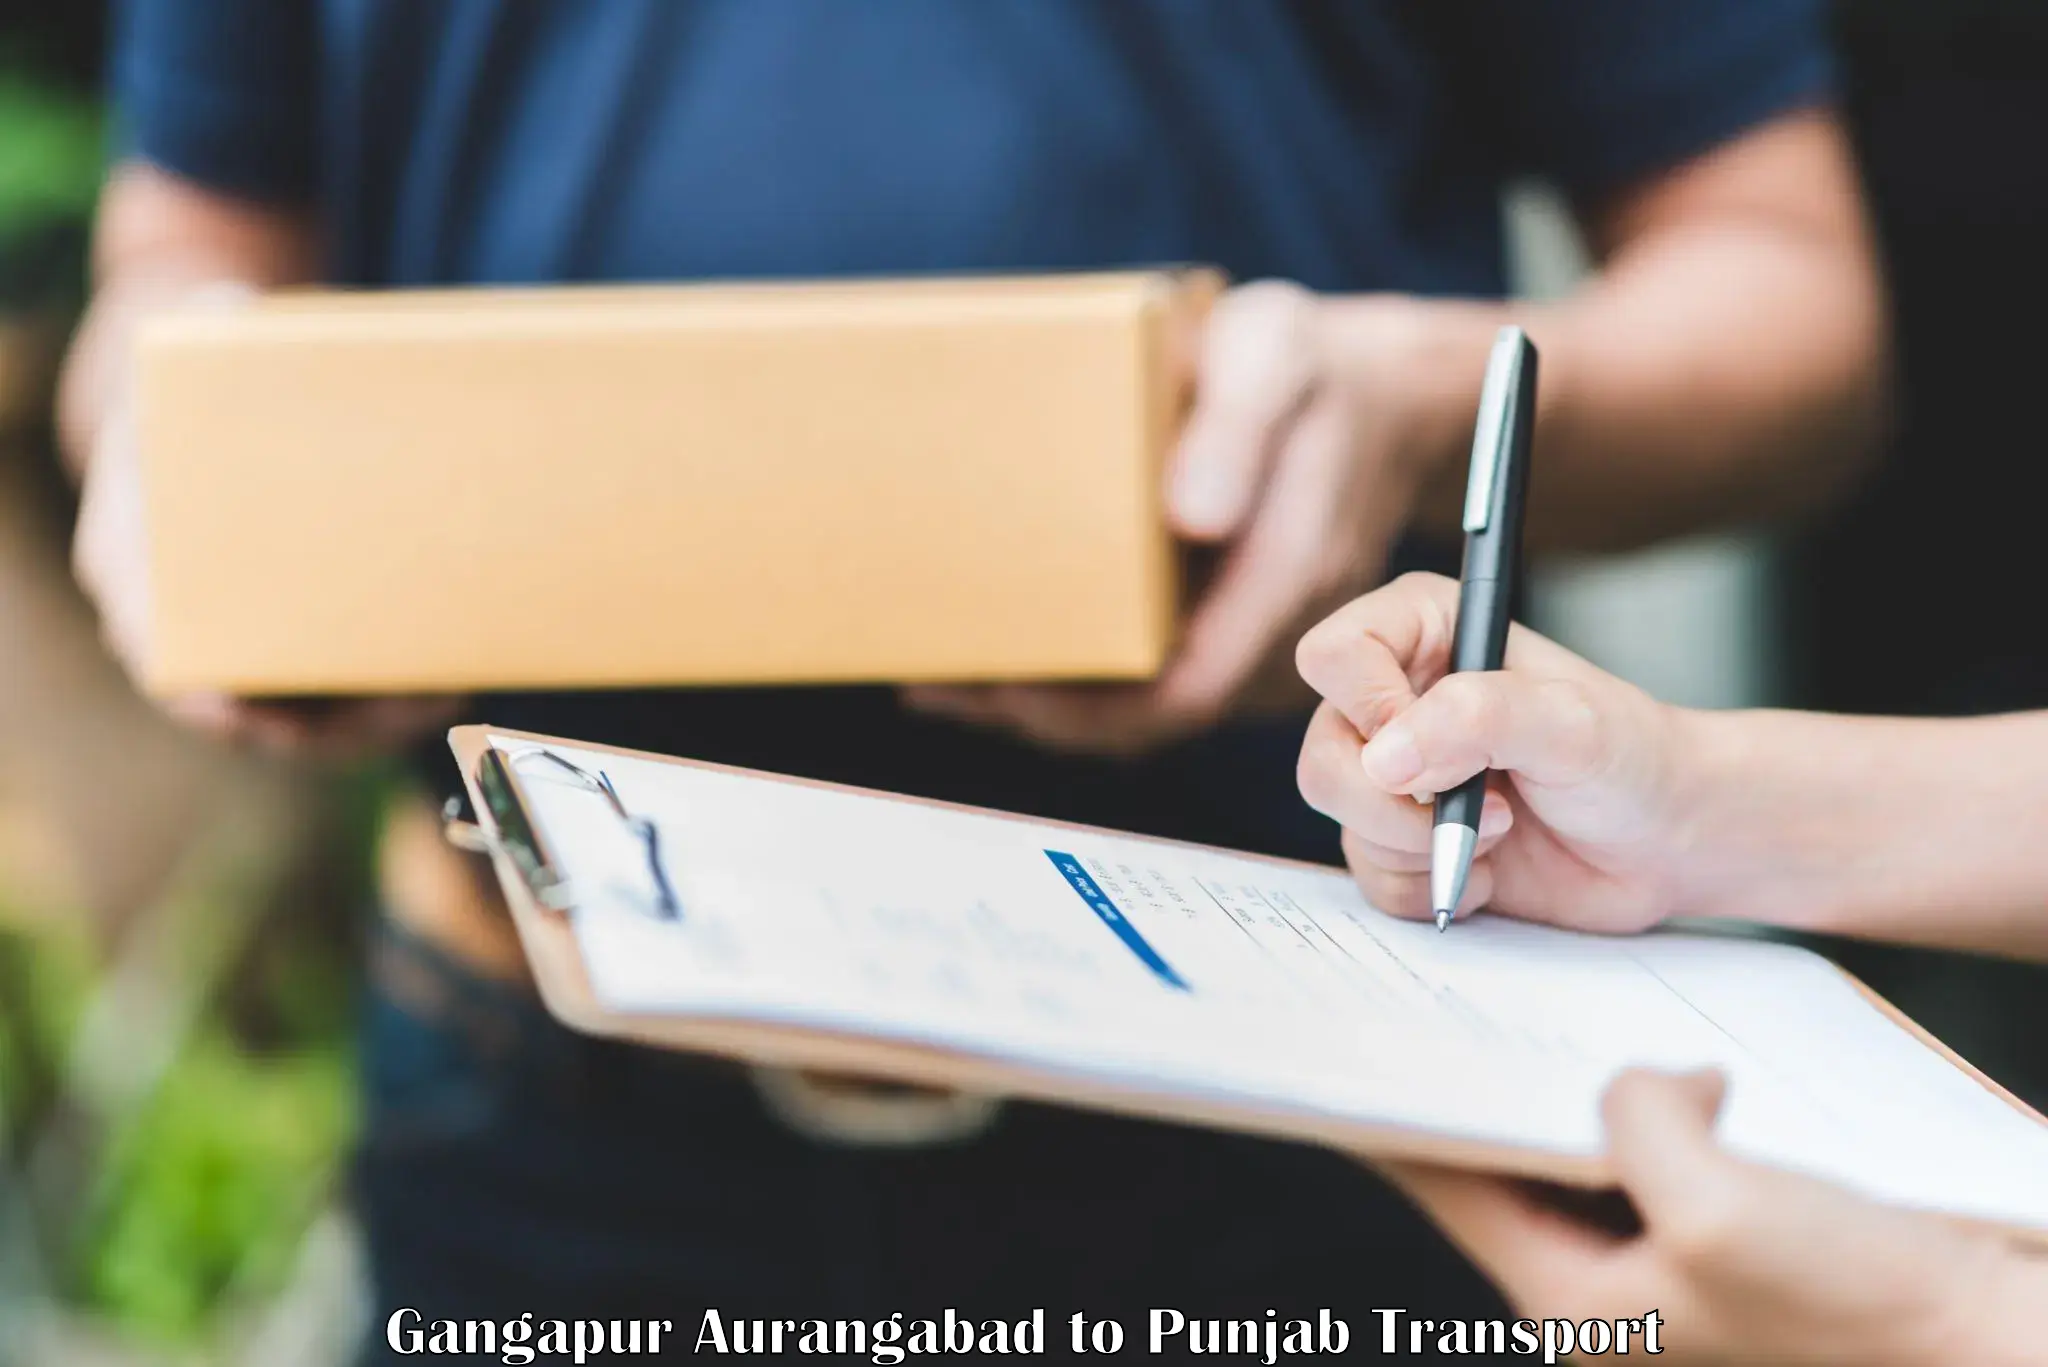 Delivery service Gangapur Aurangabad to Punjab